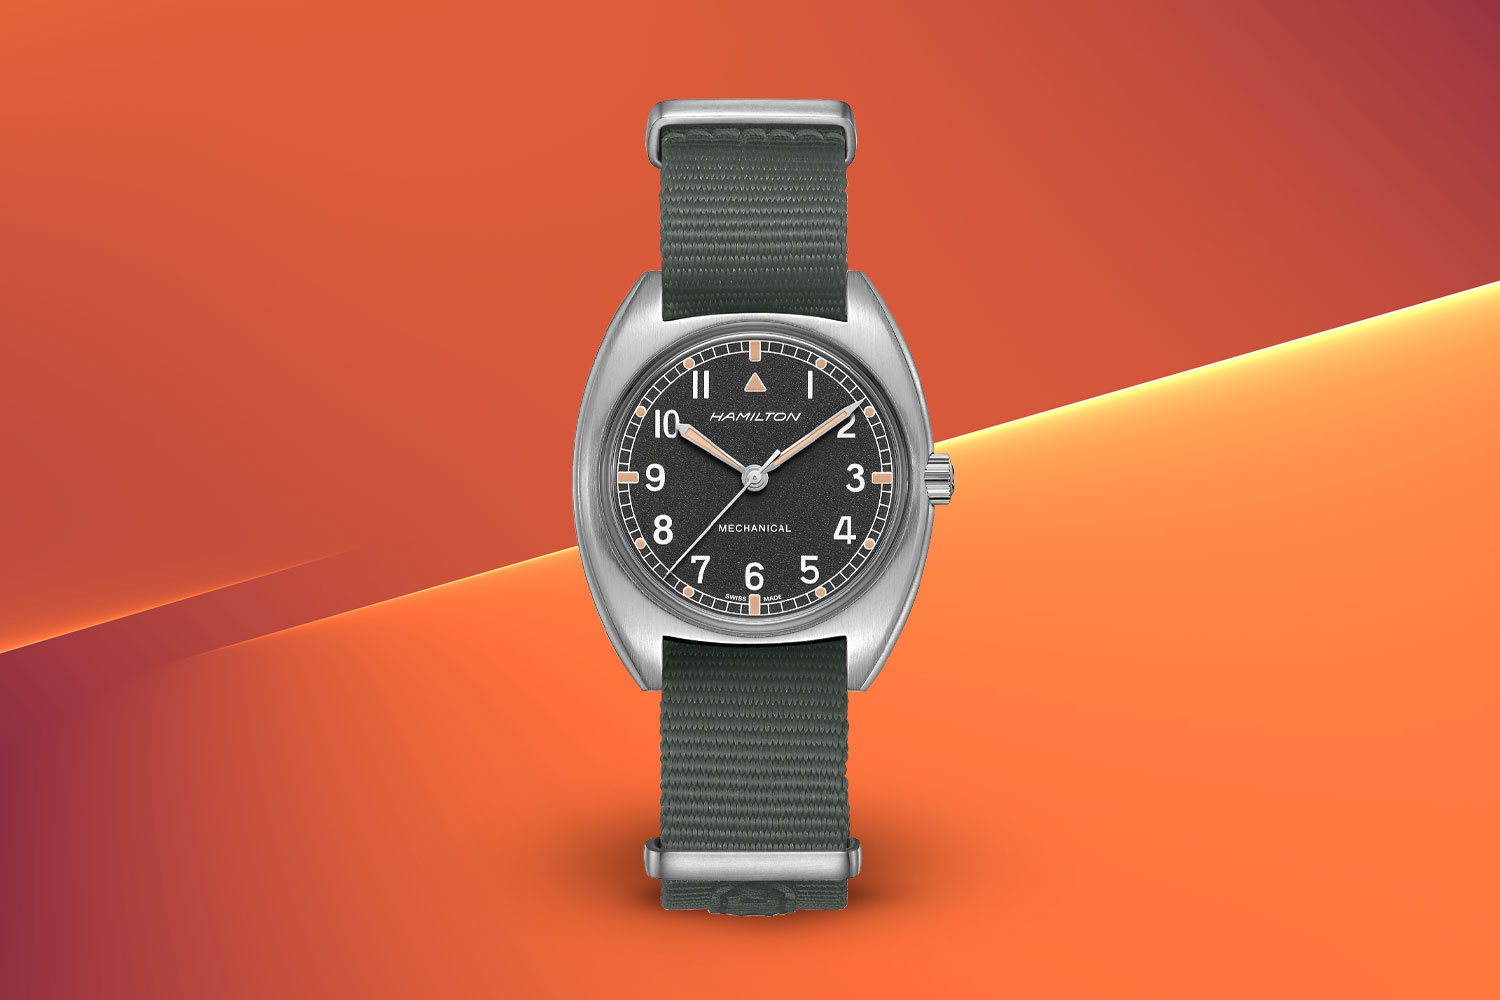 Hamilton Pilot's Watch on orange background